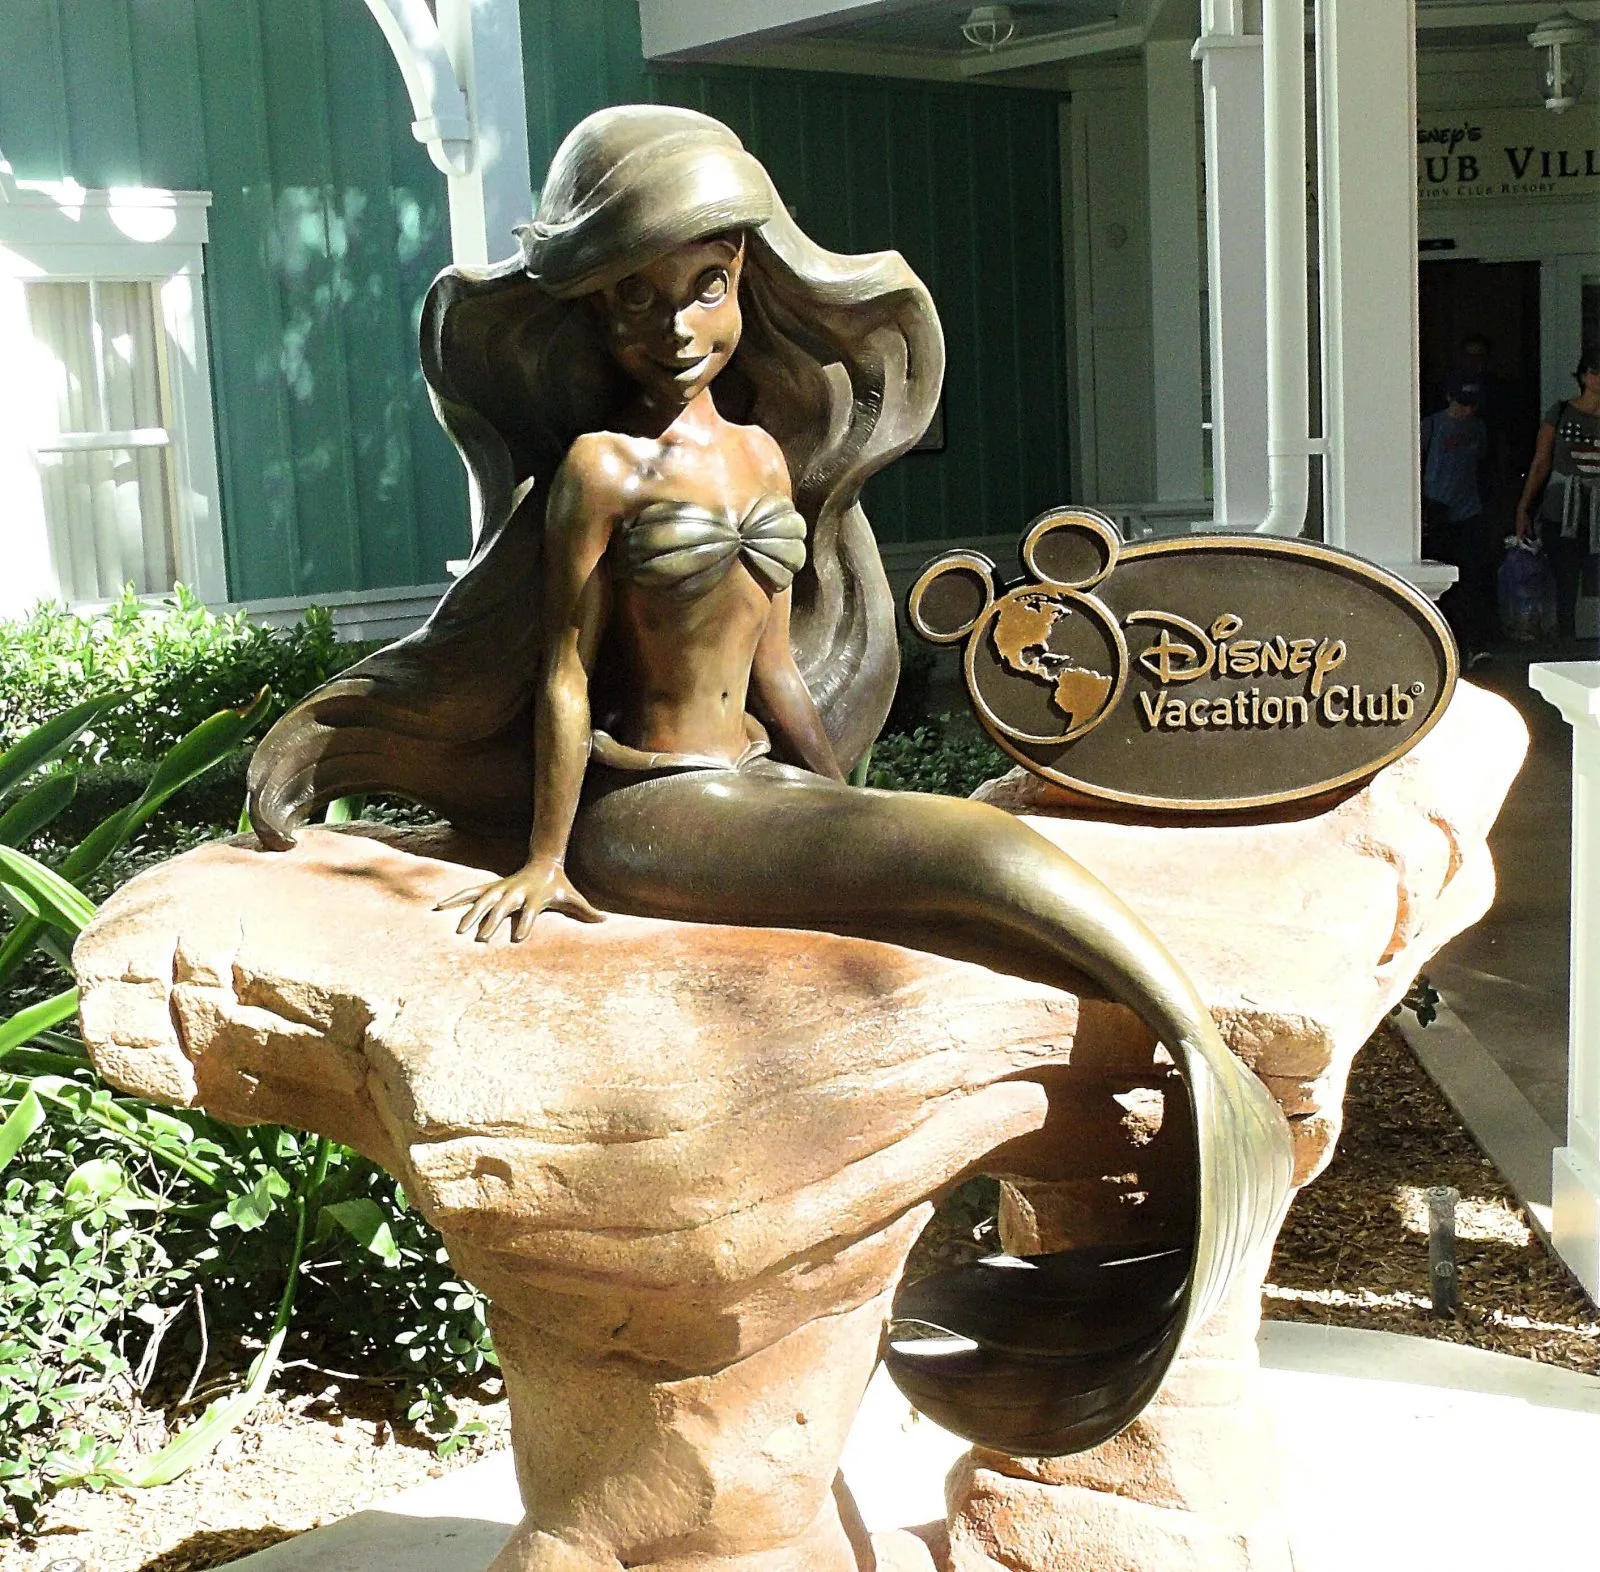 Ariel statue with Disney vacation club plaque